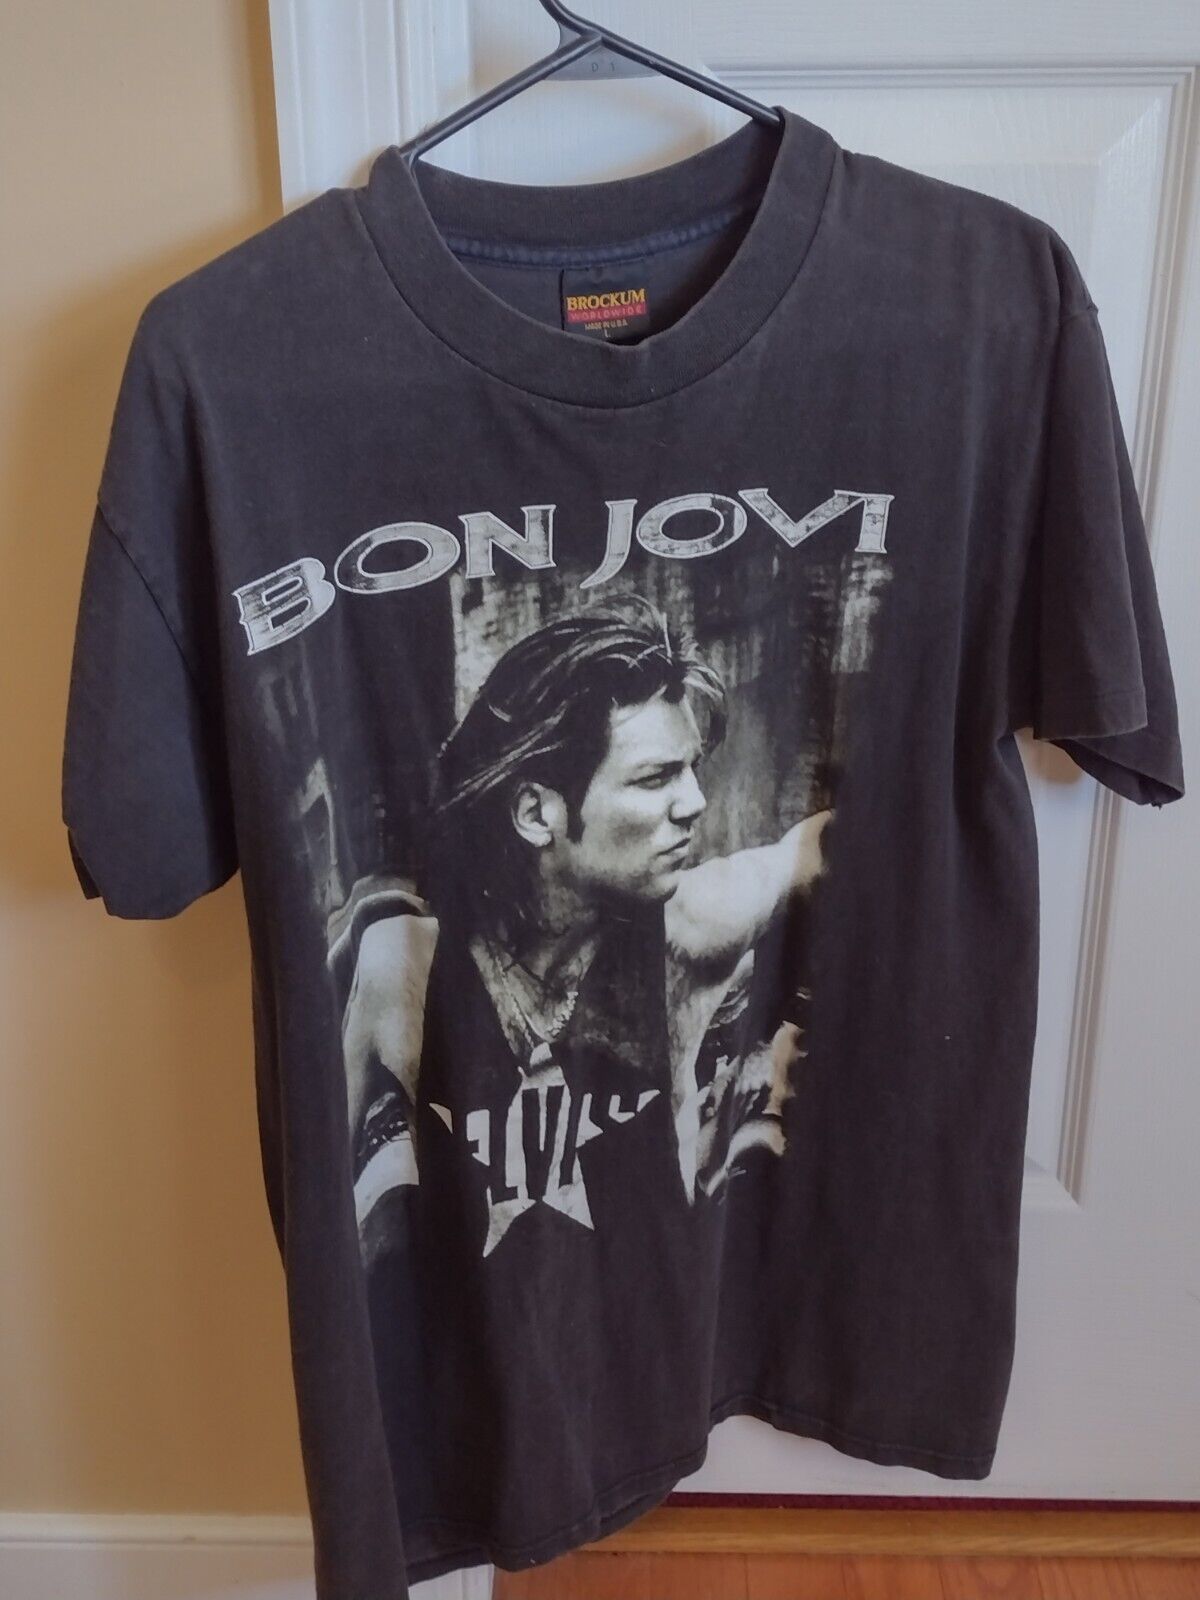 AWESOME Vintage 1990s Keep the Faith 1993 Bon Jovi Tour Shirt Large